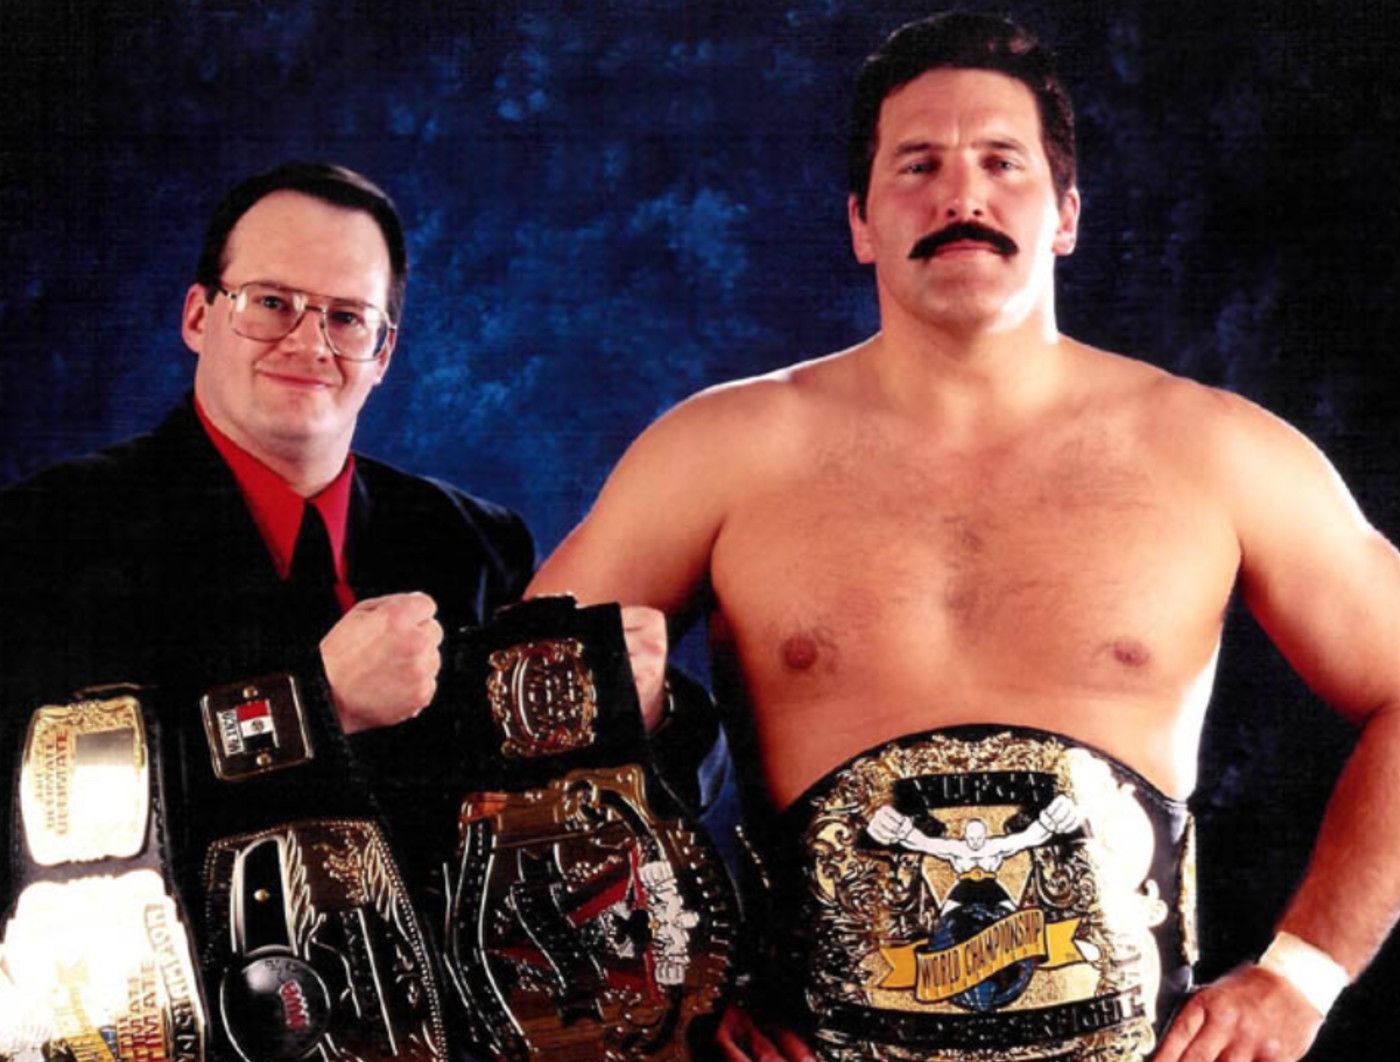 WWE's NWA faction featuring Jim Cornette and Dan Severn